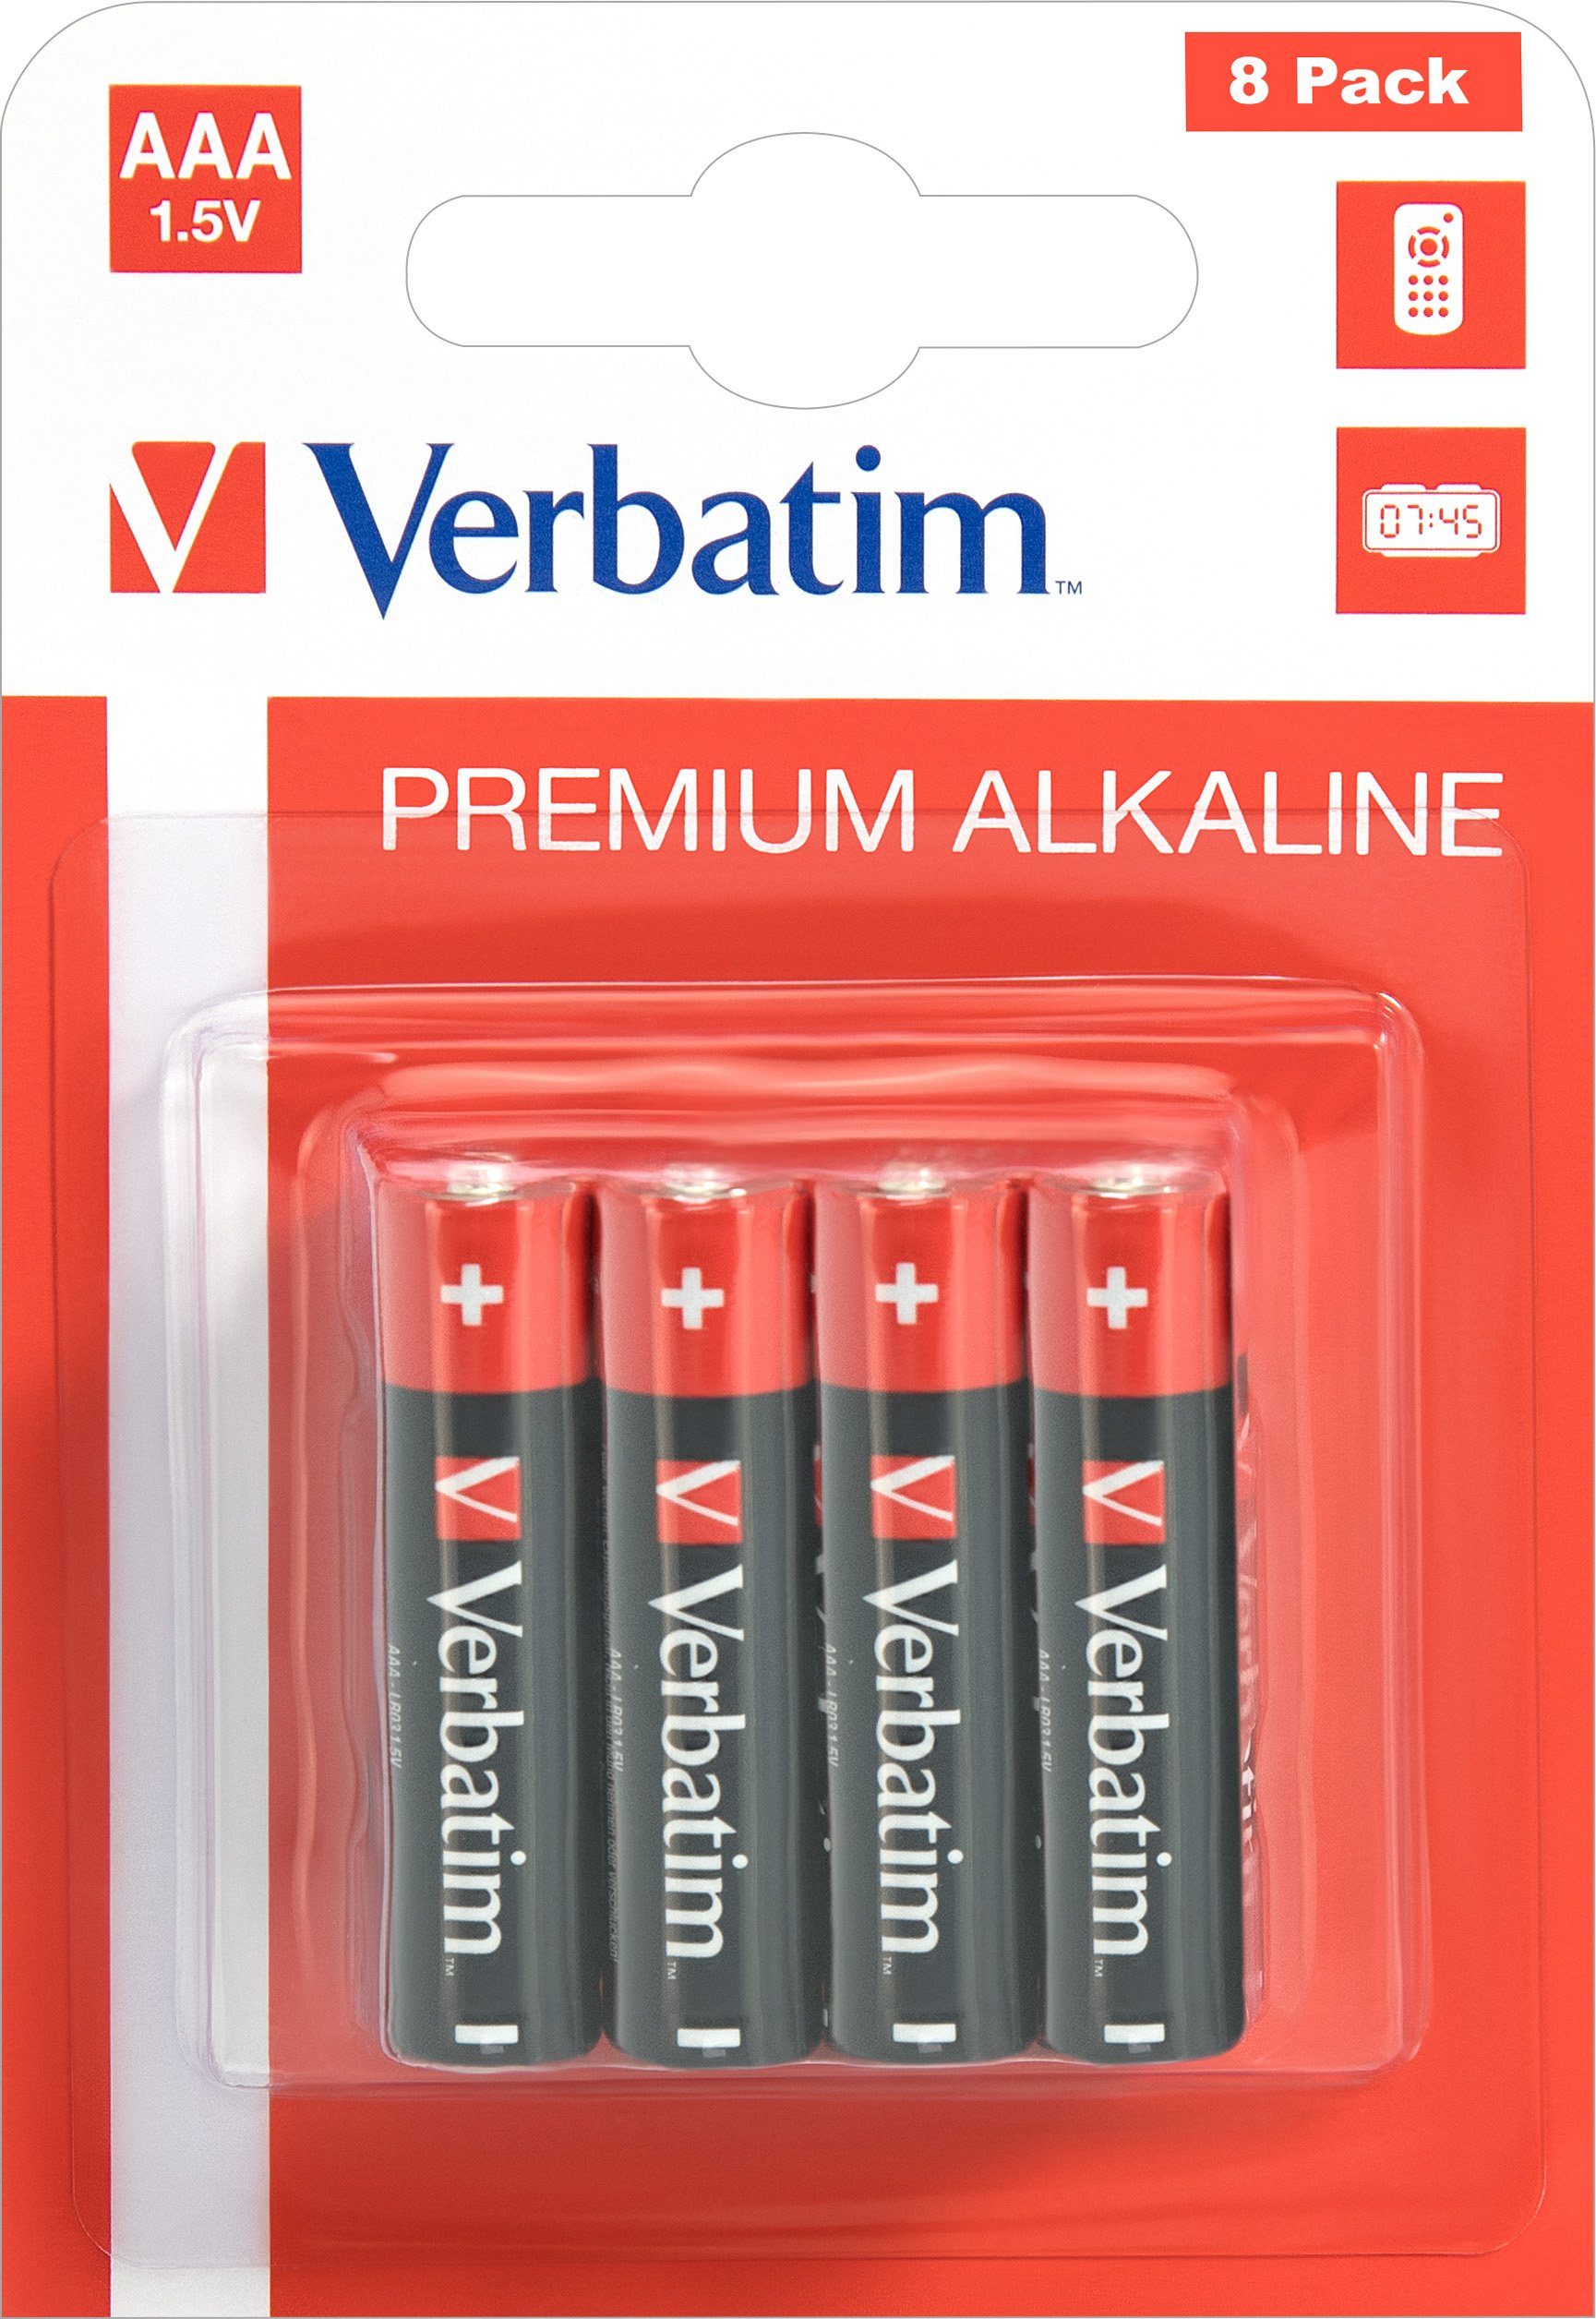 Verbatim Verbatim Batterie Alkaline, Micro, Batterie 1.5V AAA, Premium, LR03, Bl Retail